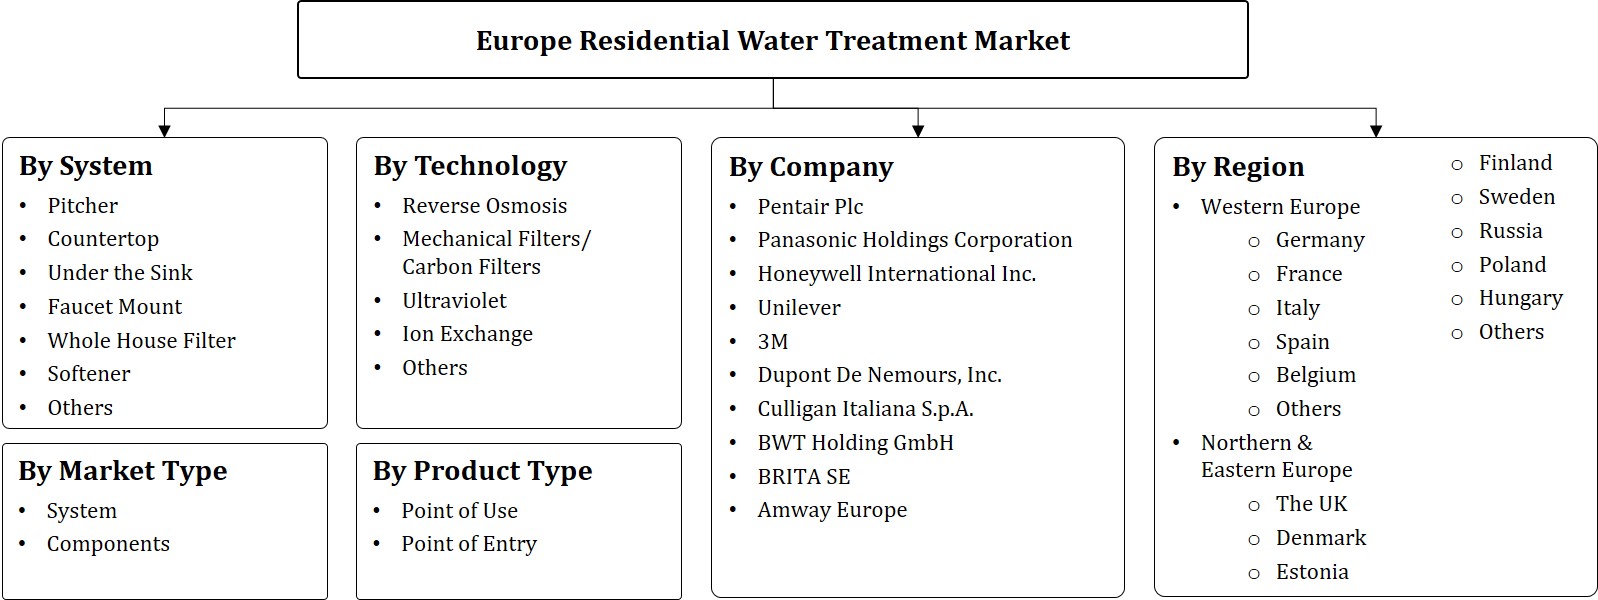 Europe Residential Water Treatment Market Segmentation